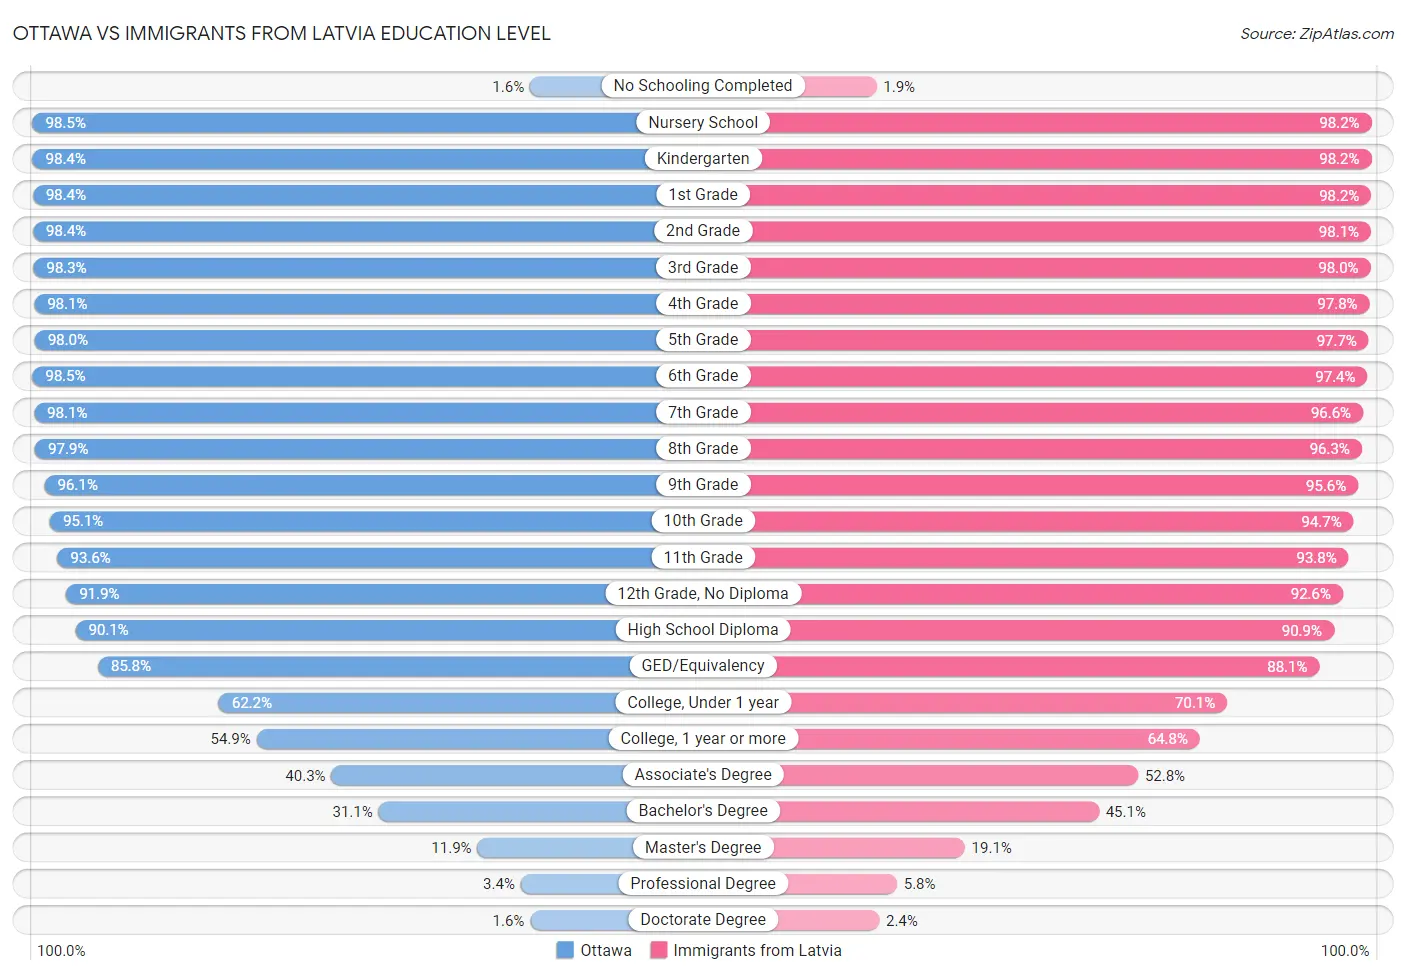 Ottawa vs Immigrants from Latvia Education Level